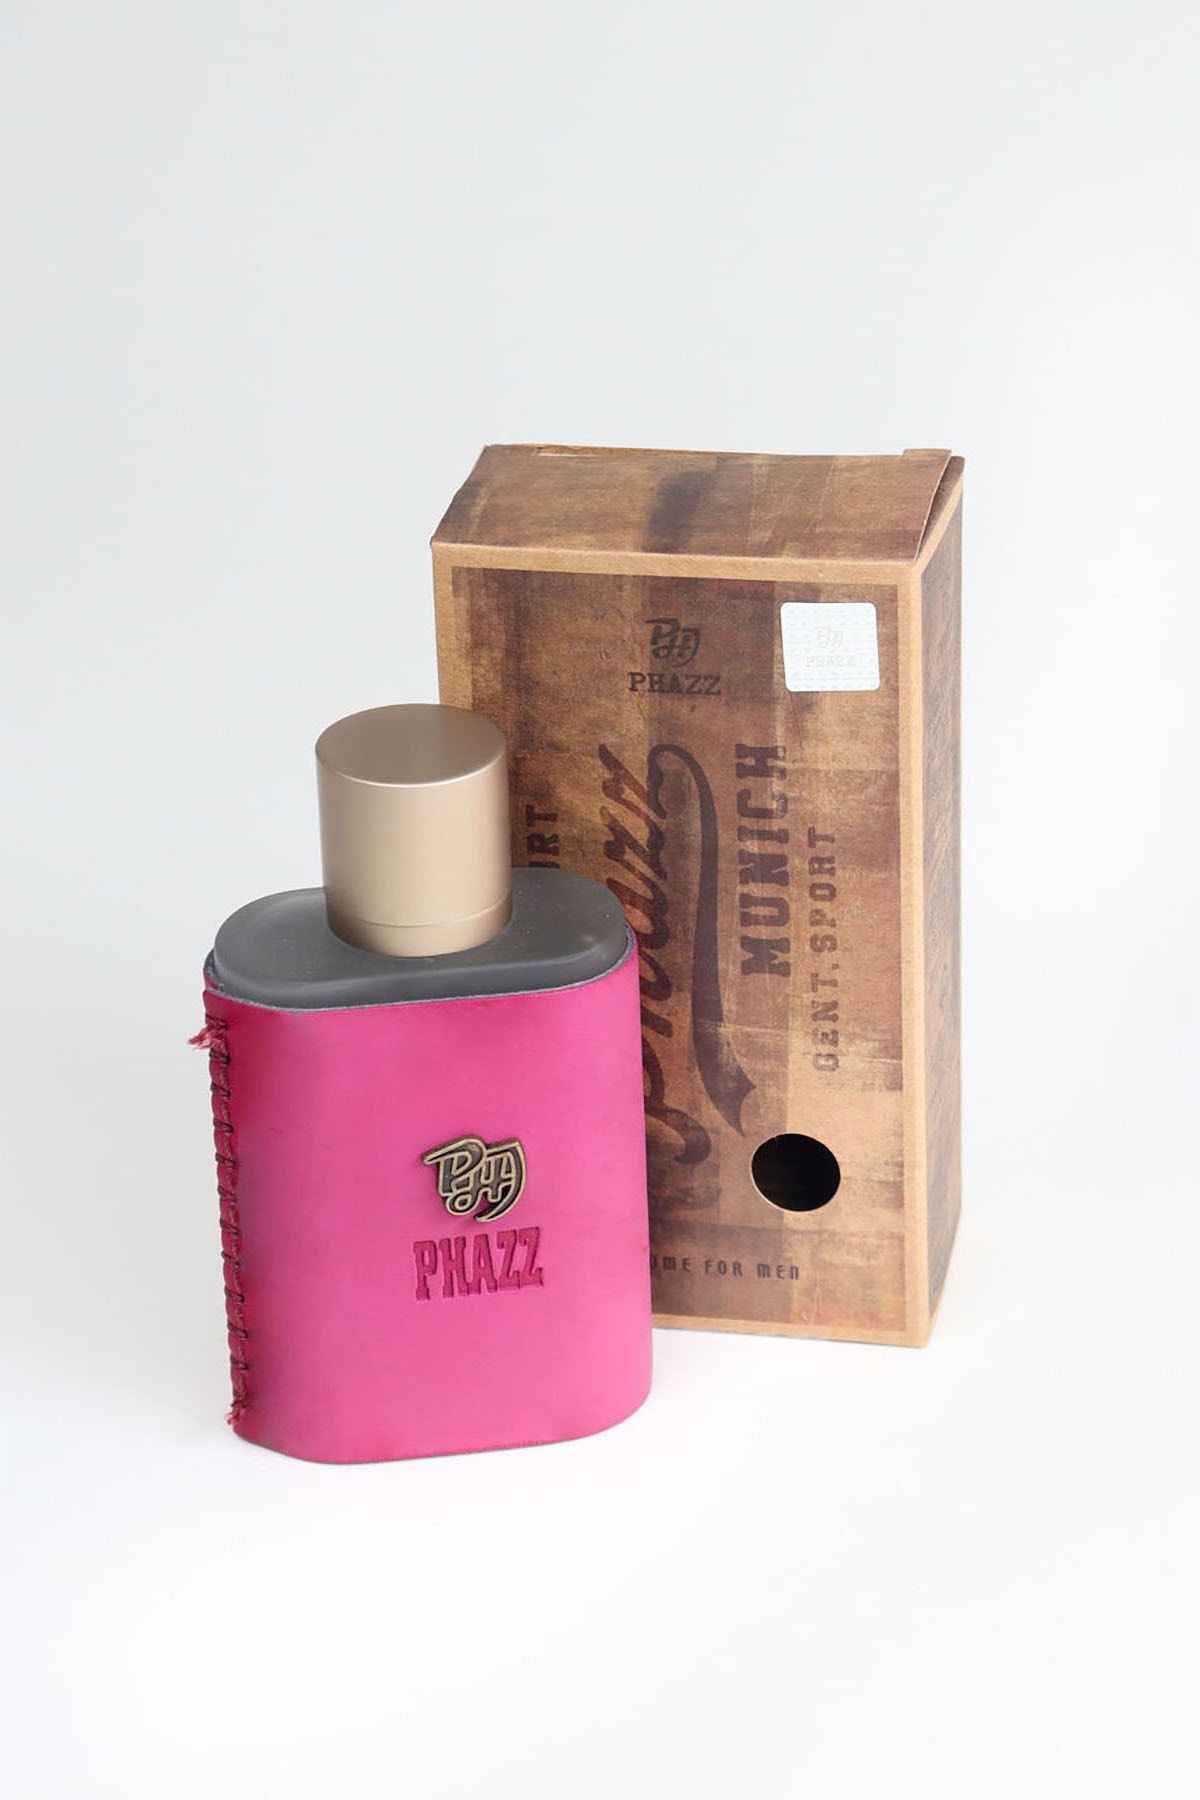 Phazz Brand Ph9000 Erkek Parfümü Charming